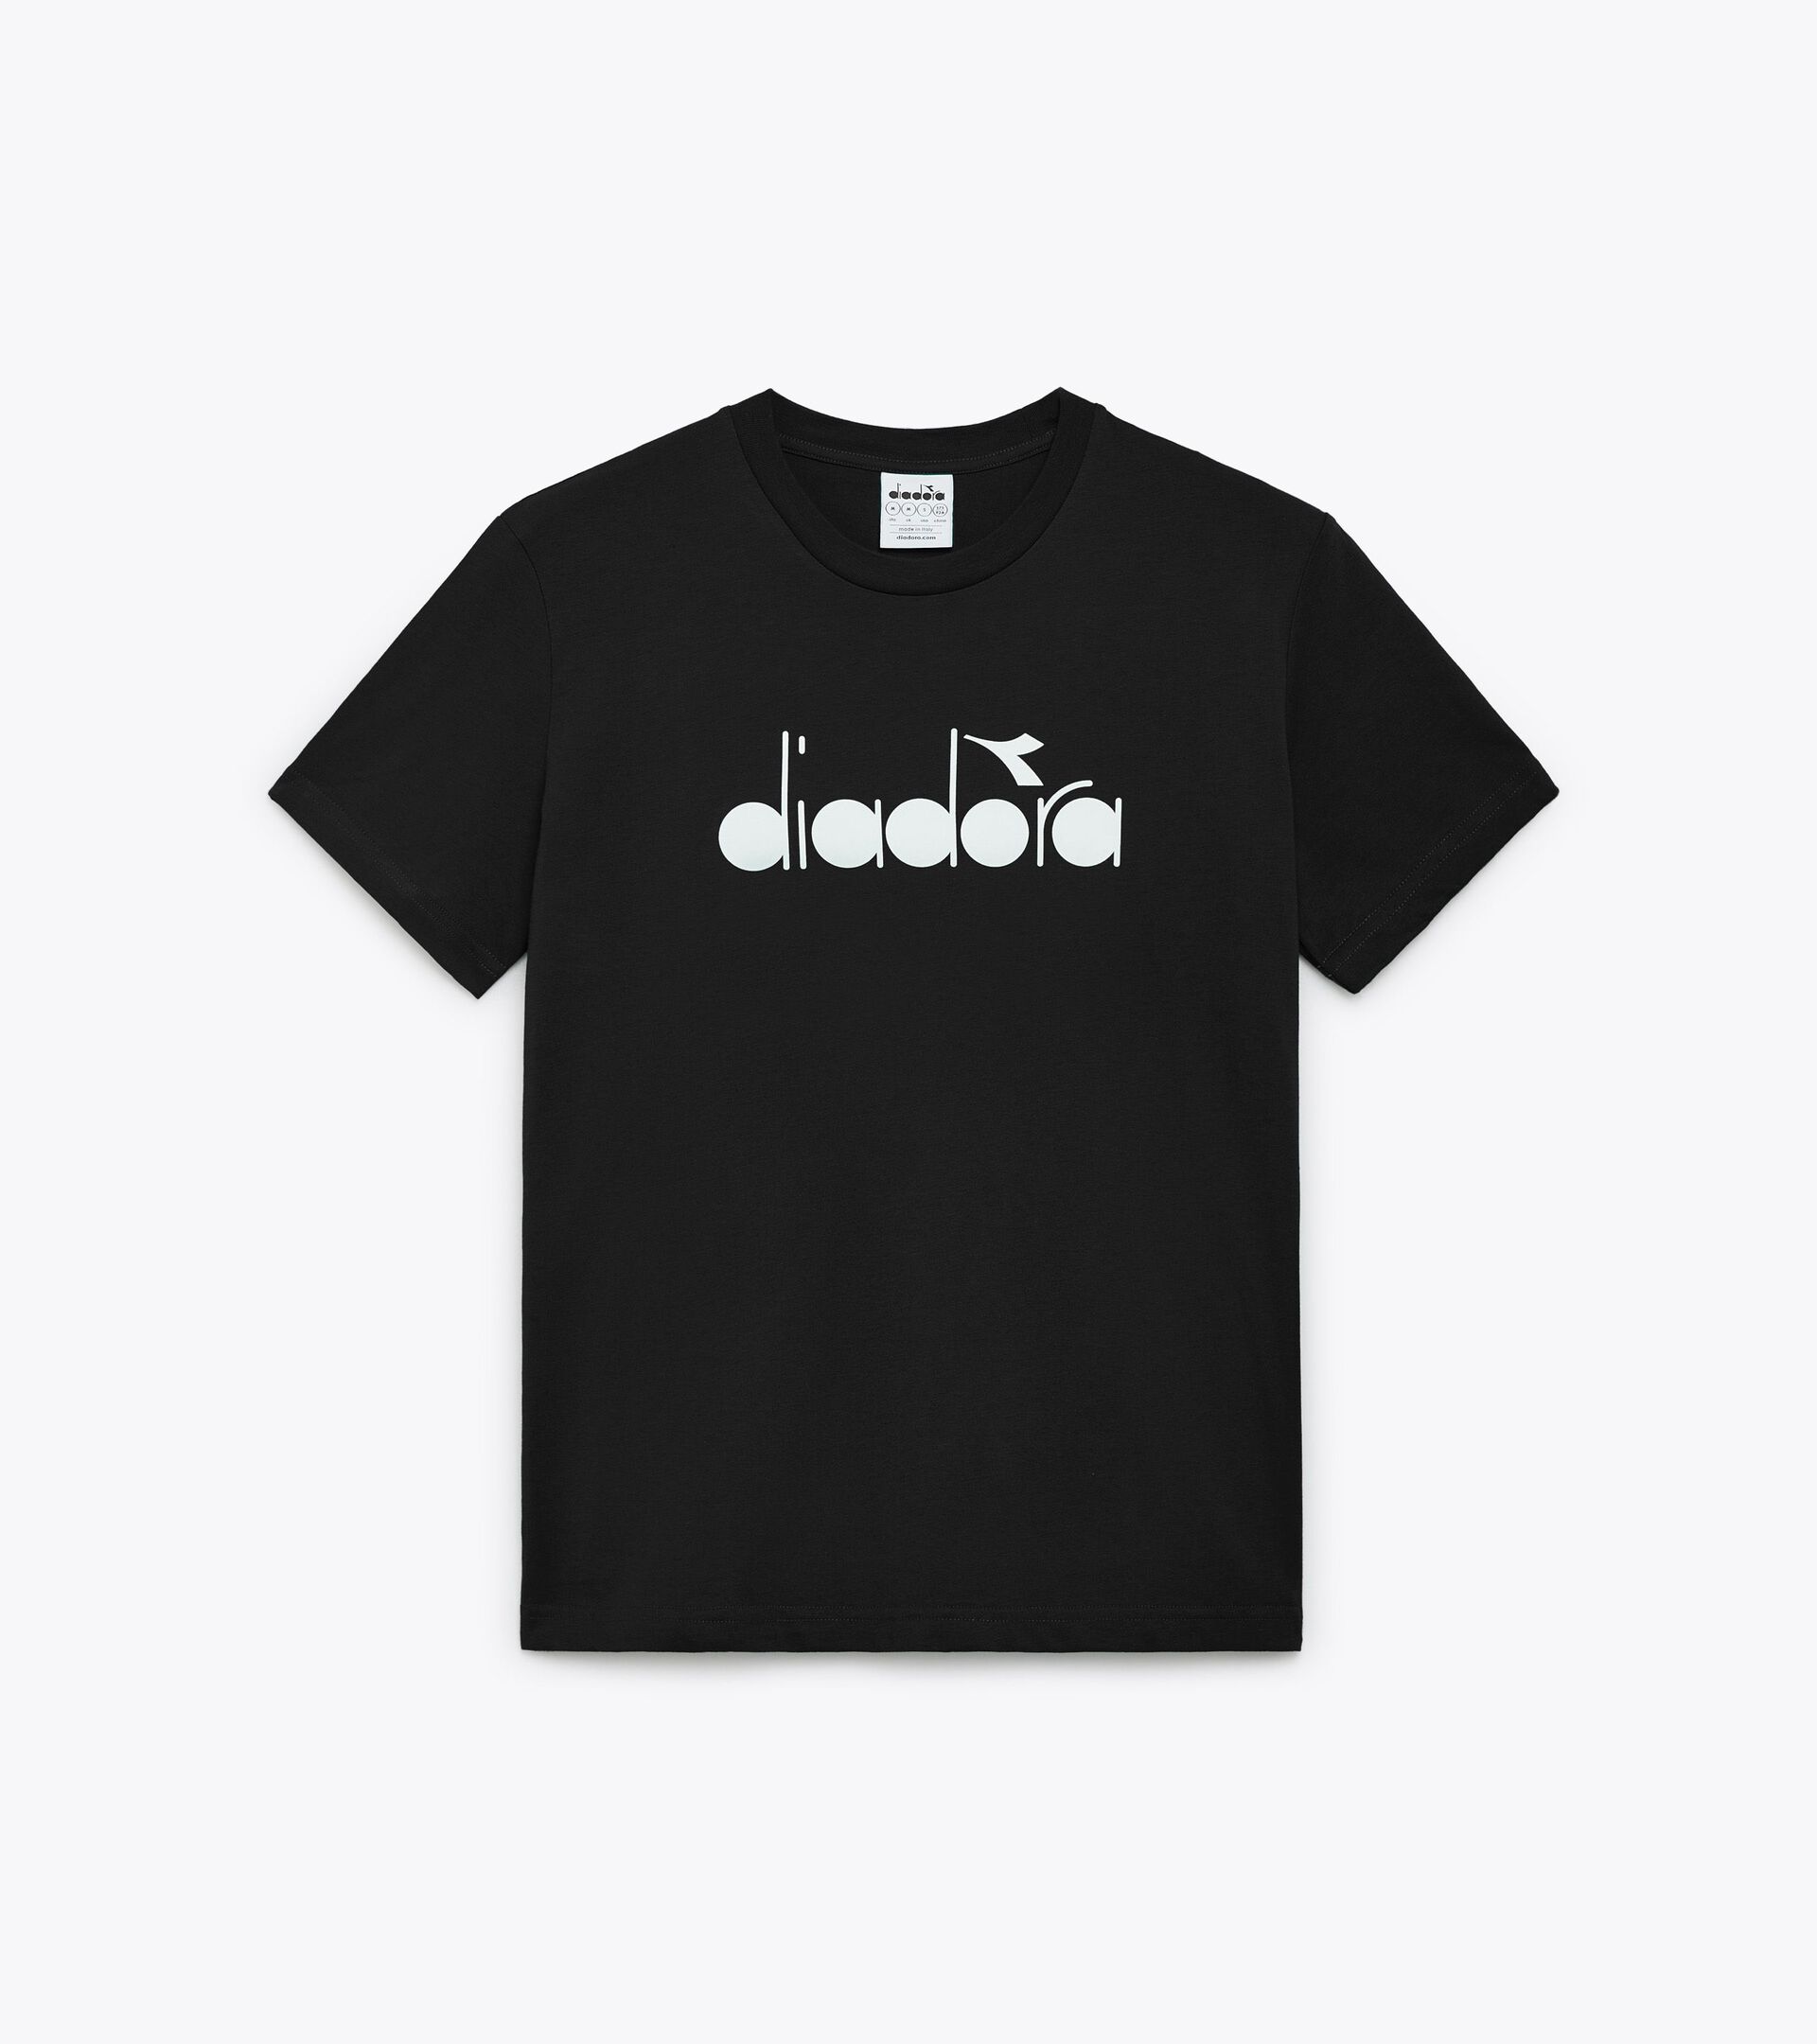 T-shirt - Made in Italy - Gender Neutral T-SHIRT SS LOGO NERO - Diadora